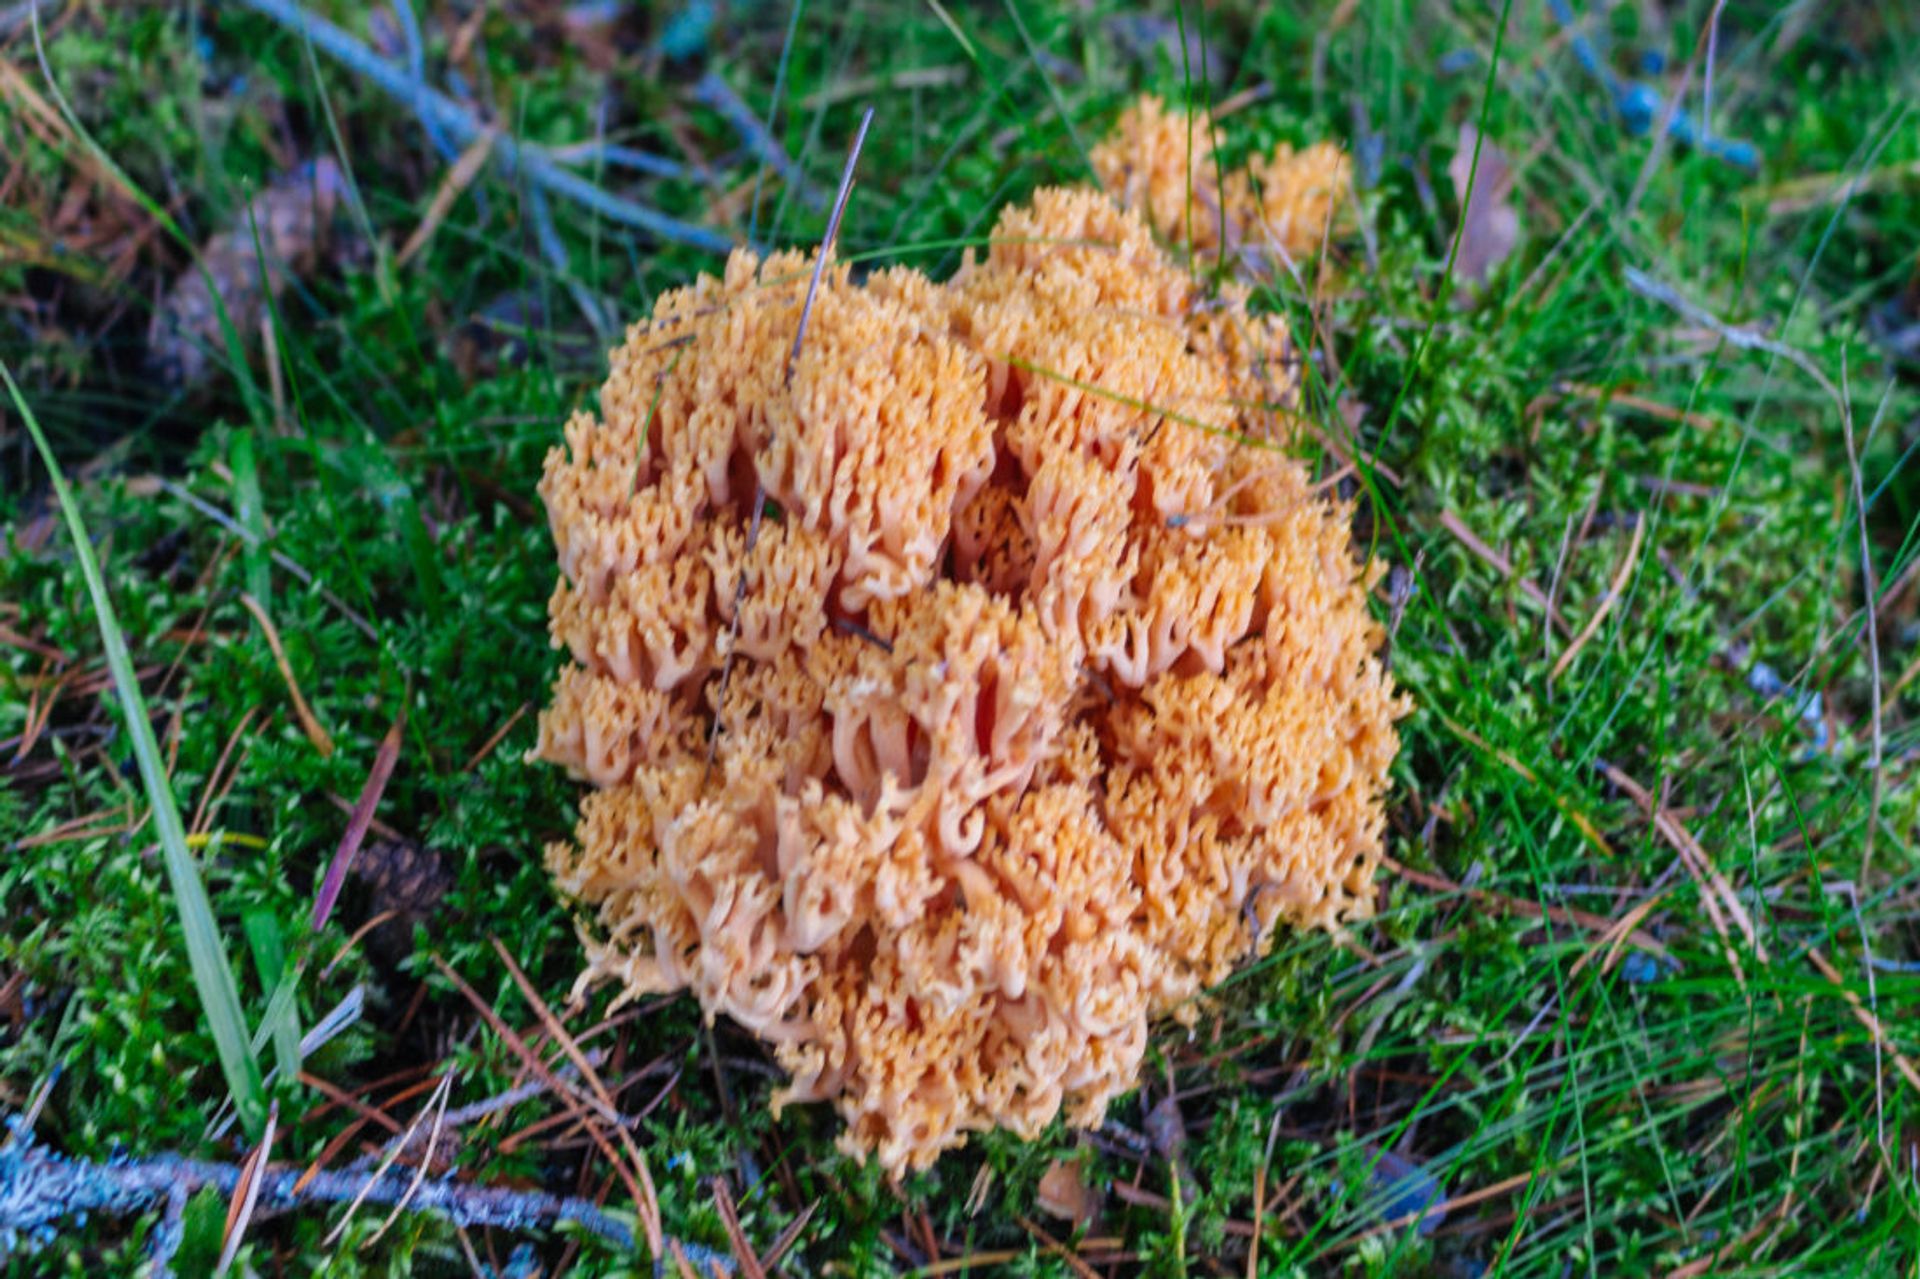 Close up of large mushroom.